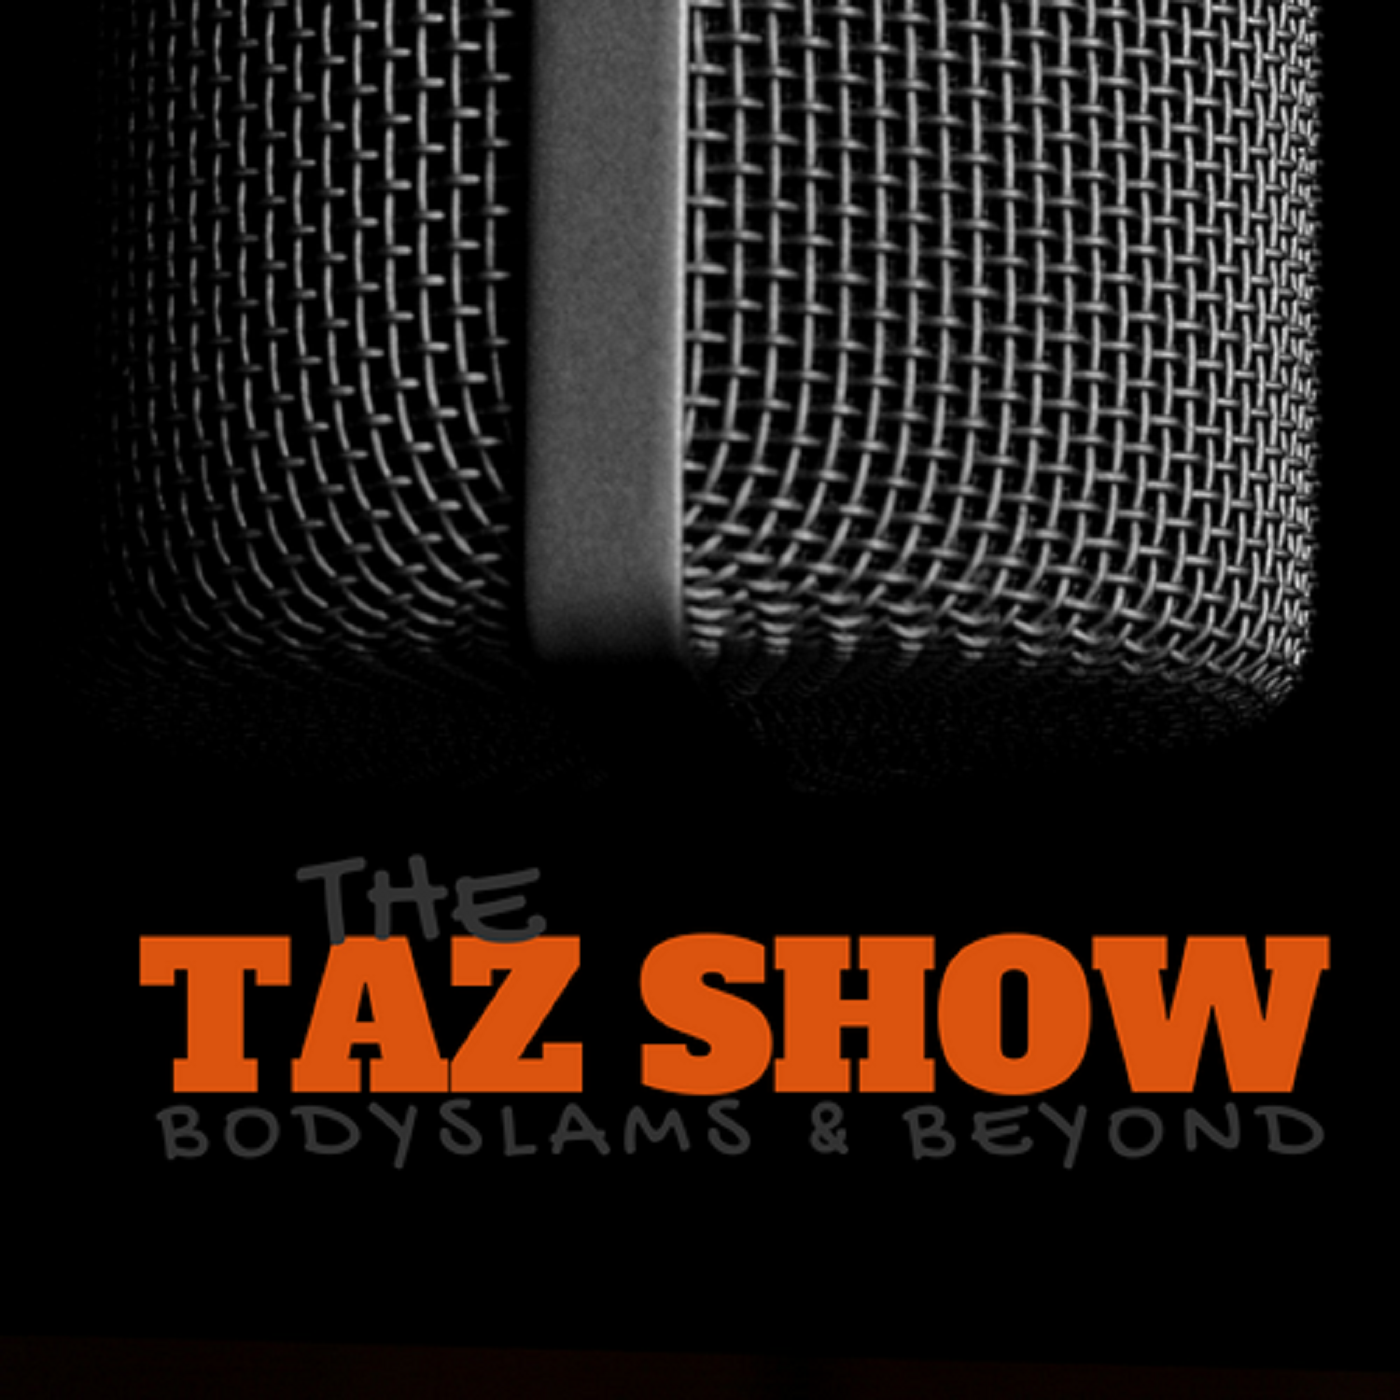 The Taz Show! Thursday, October 8th, 2015